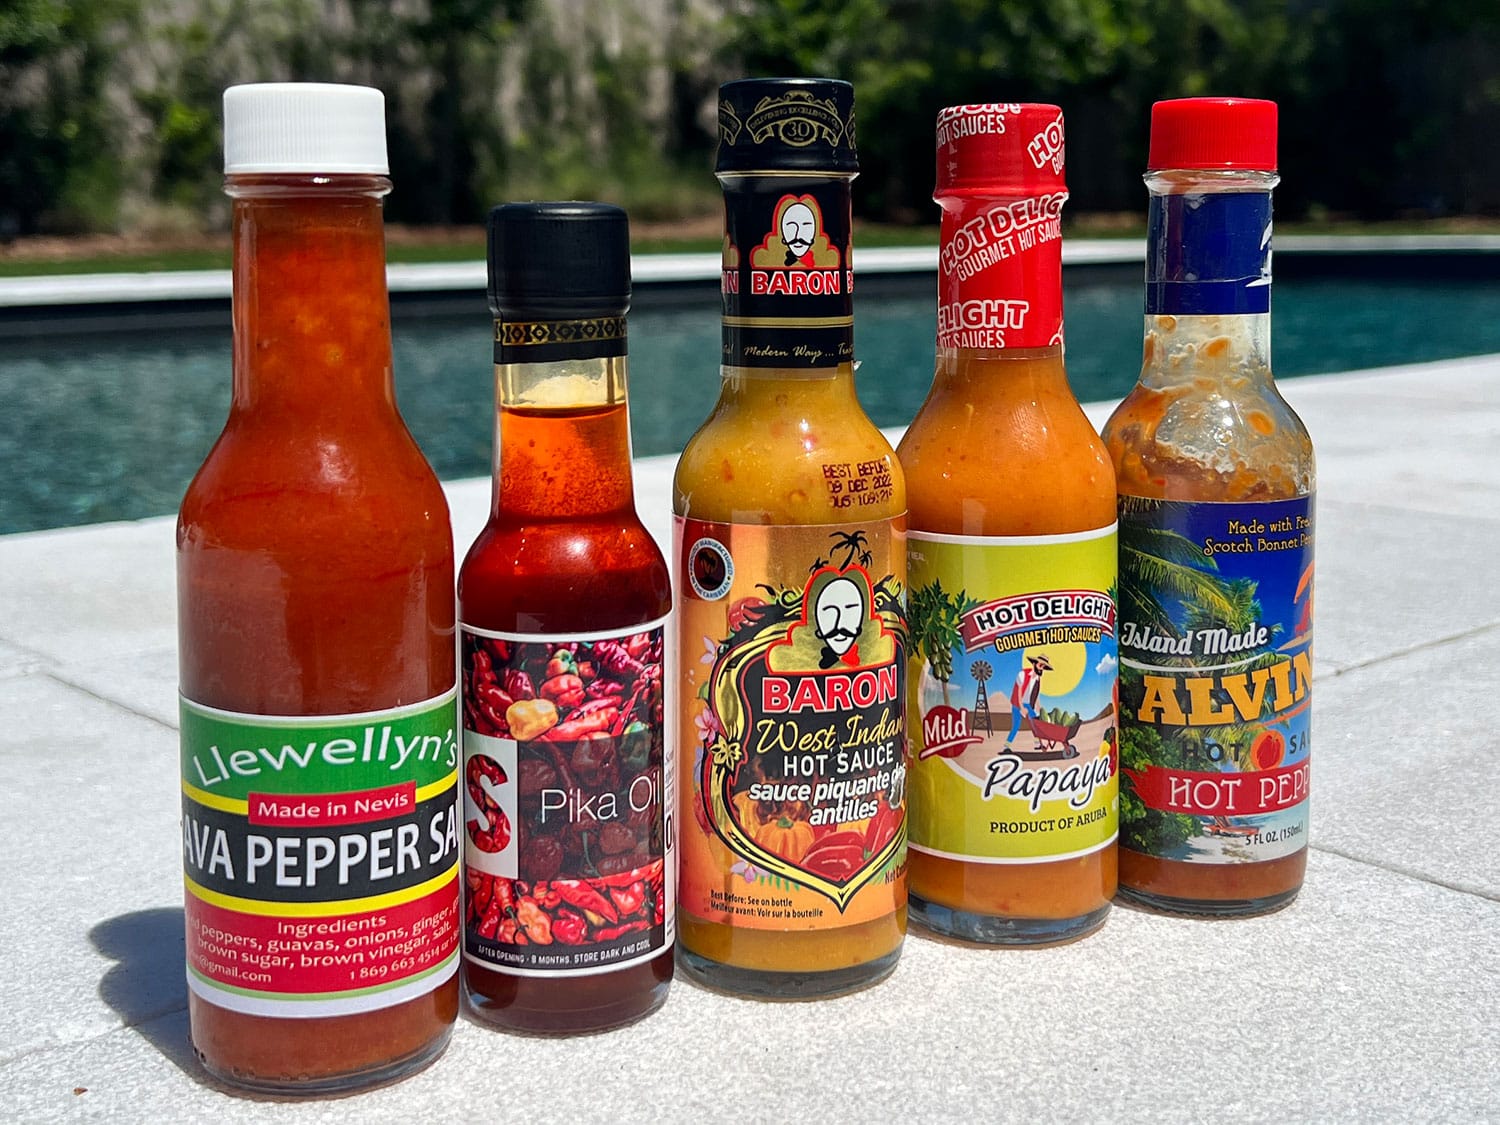 Five bottles of Caribbean hot sauce, including Llewellyn’s Guava Pepper Sauce, Hot Delight Papaya, Baron West Indian Hot Sauce, Alvin’s Hot Sauce, and Spika Oil.